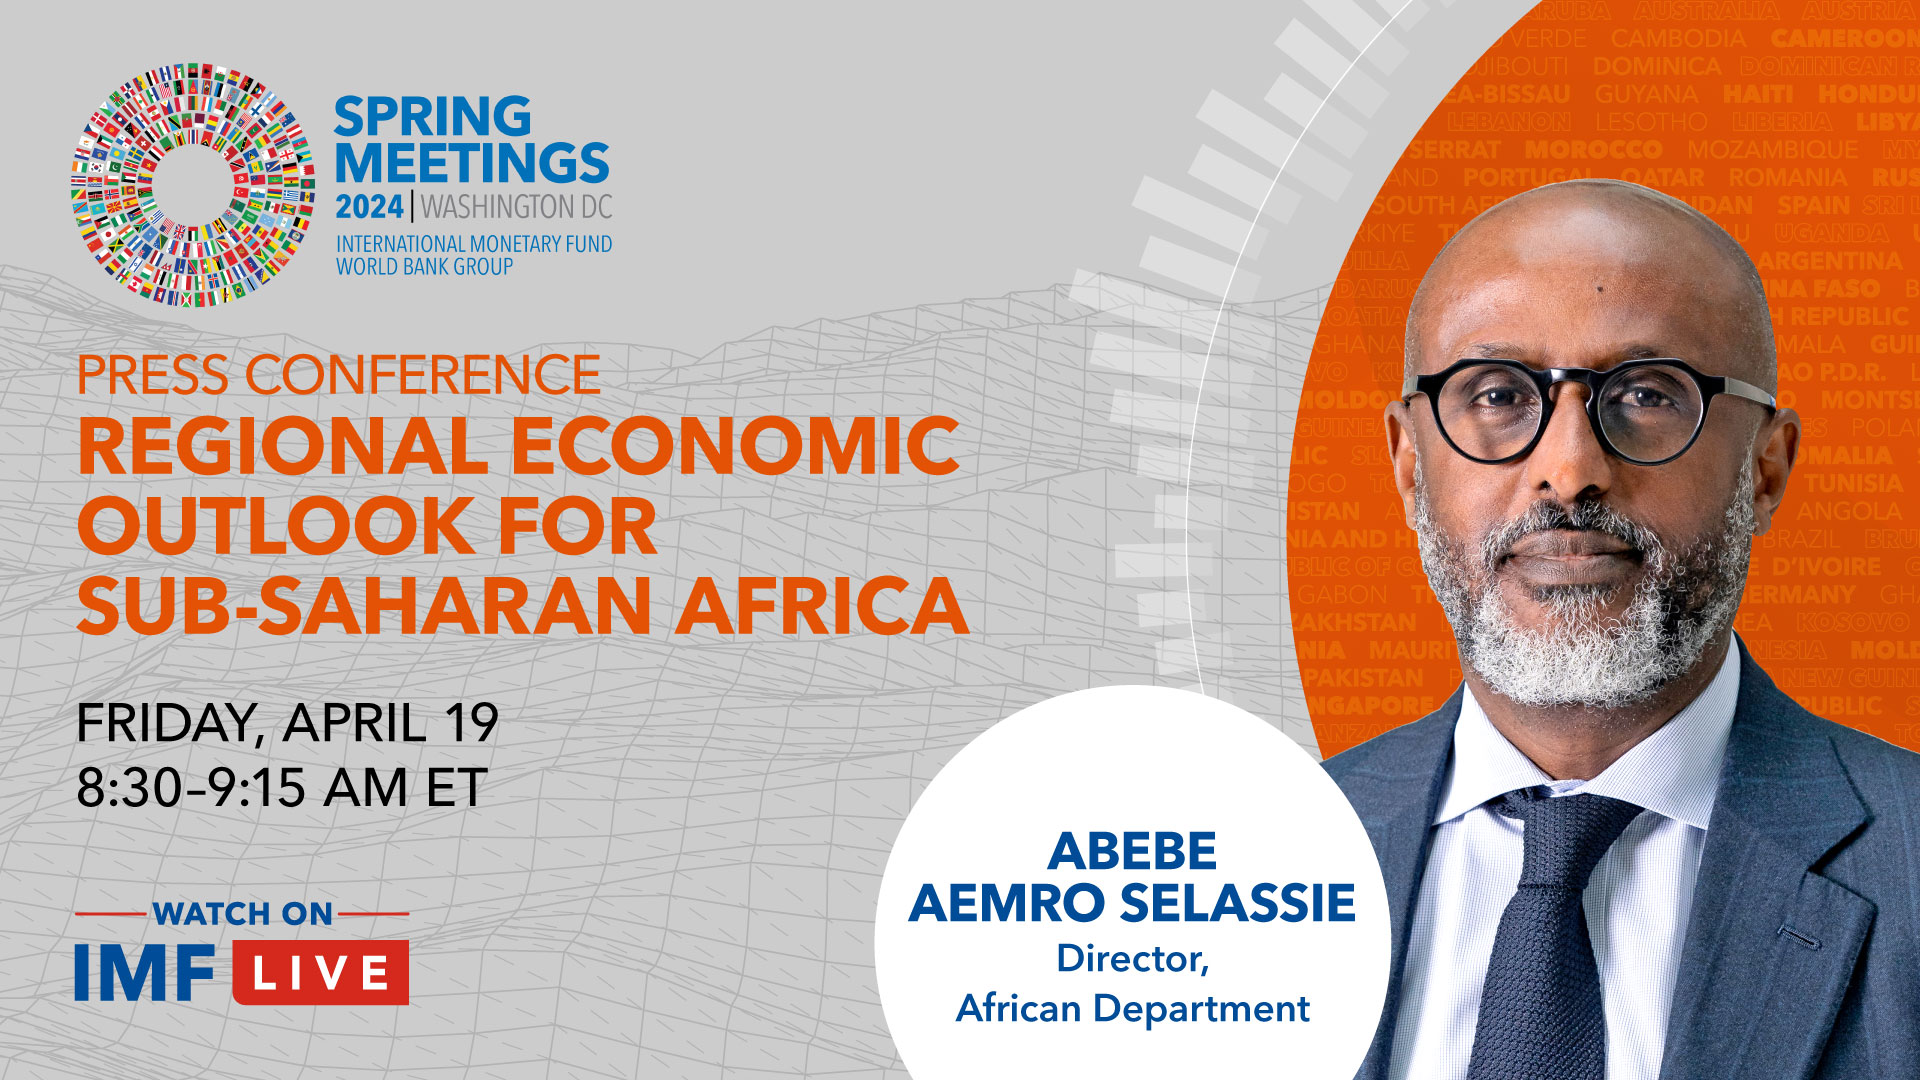 Regional Economic Outlook for Sub-saharan Africa, April 19, 2024, 8:30 AM ET